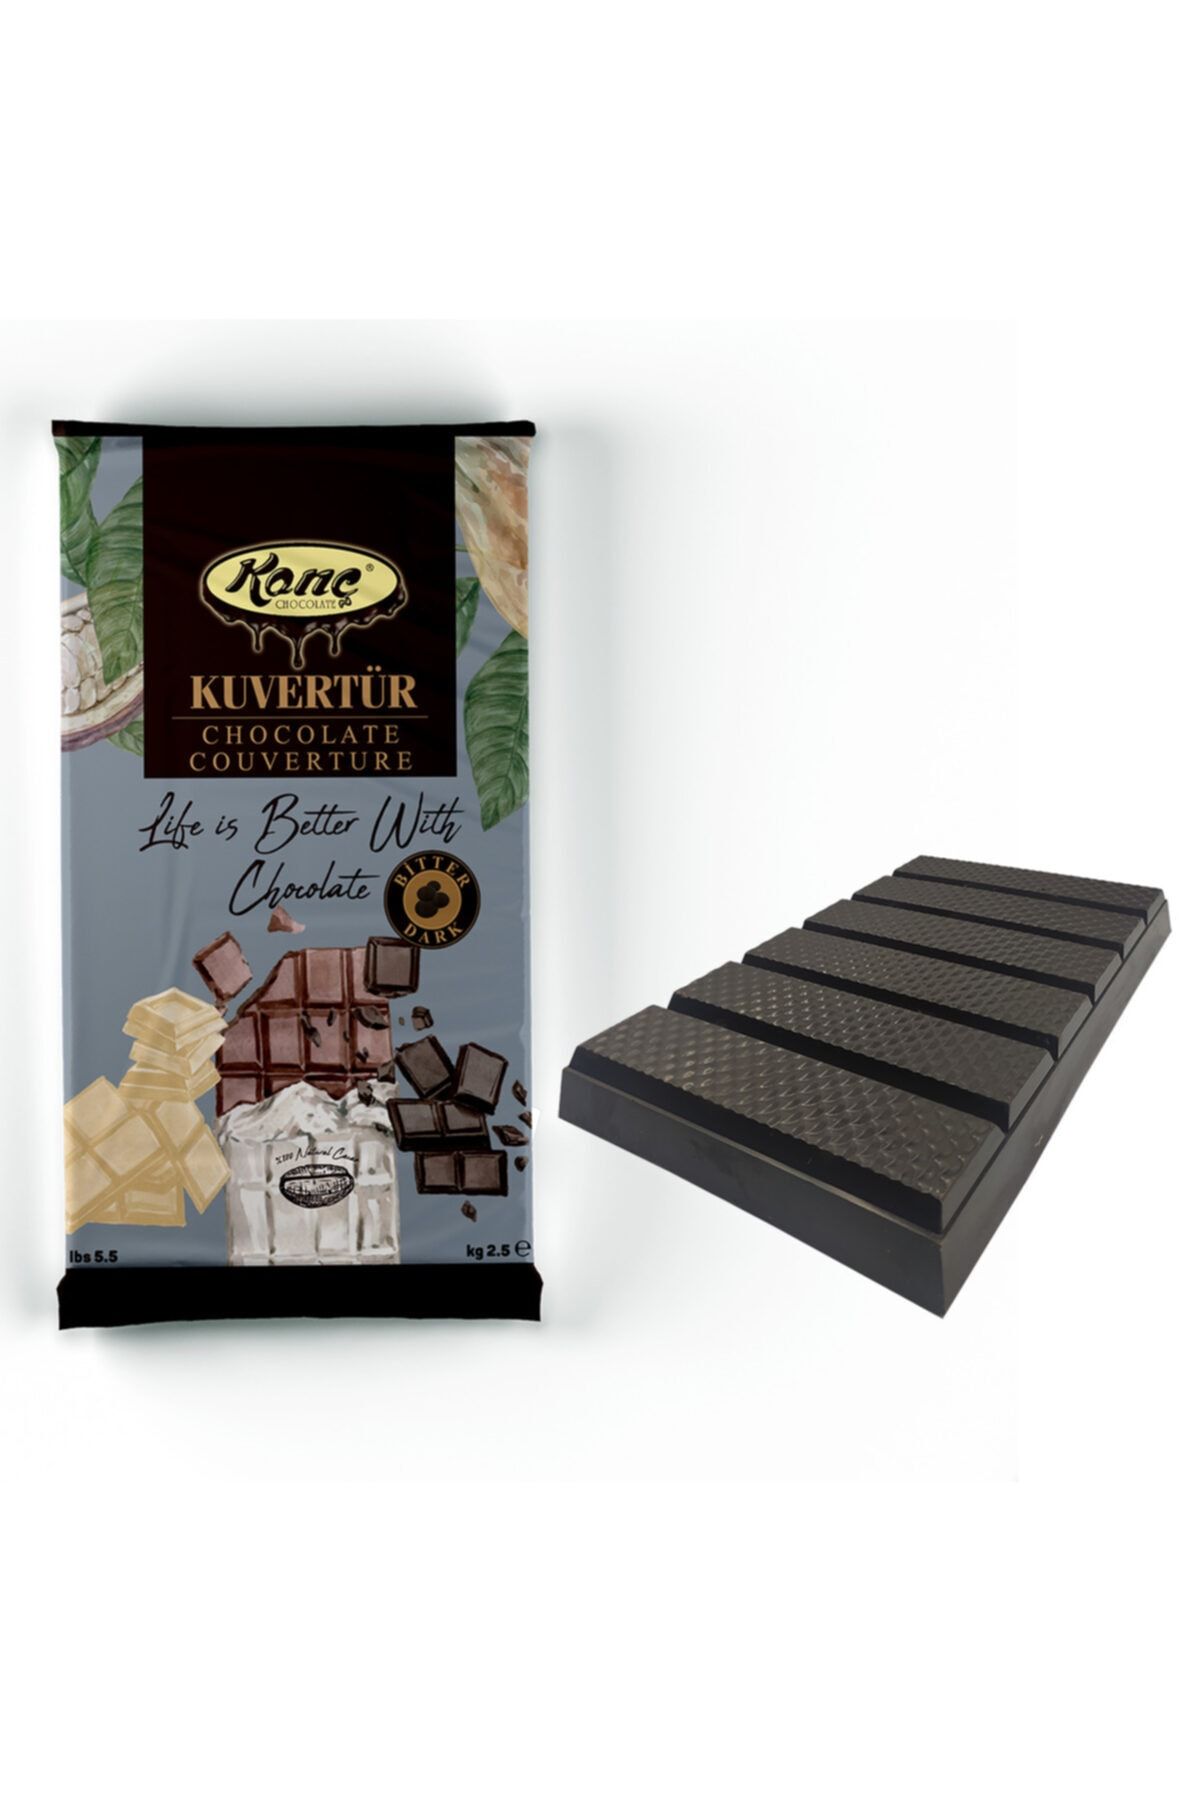 Konç Chocolate Premium Kuvertür Çikolata Bitter 2,5kg